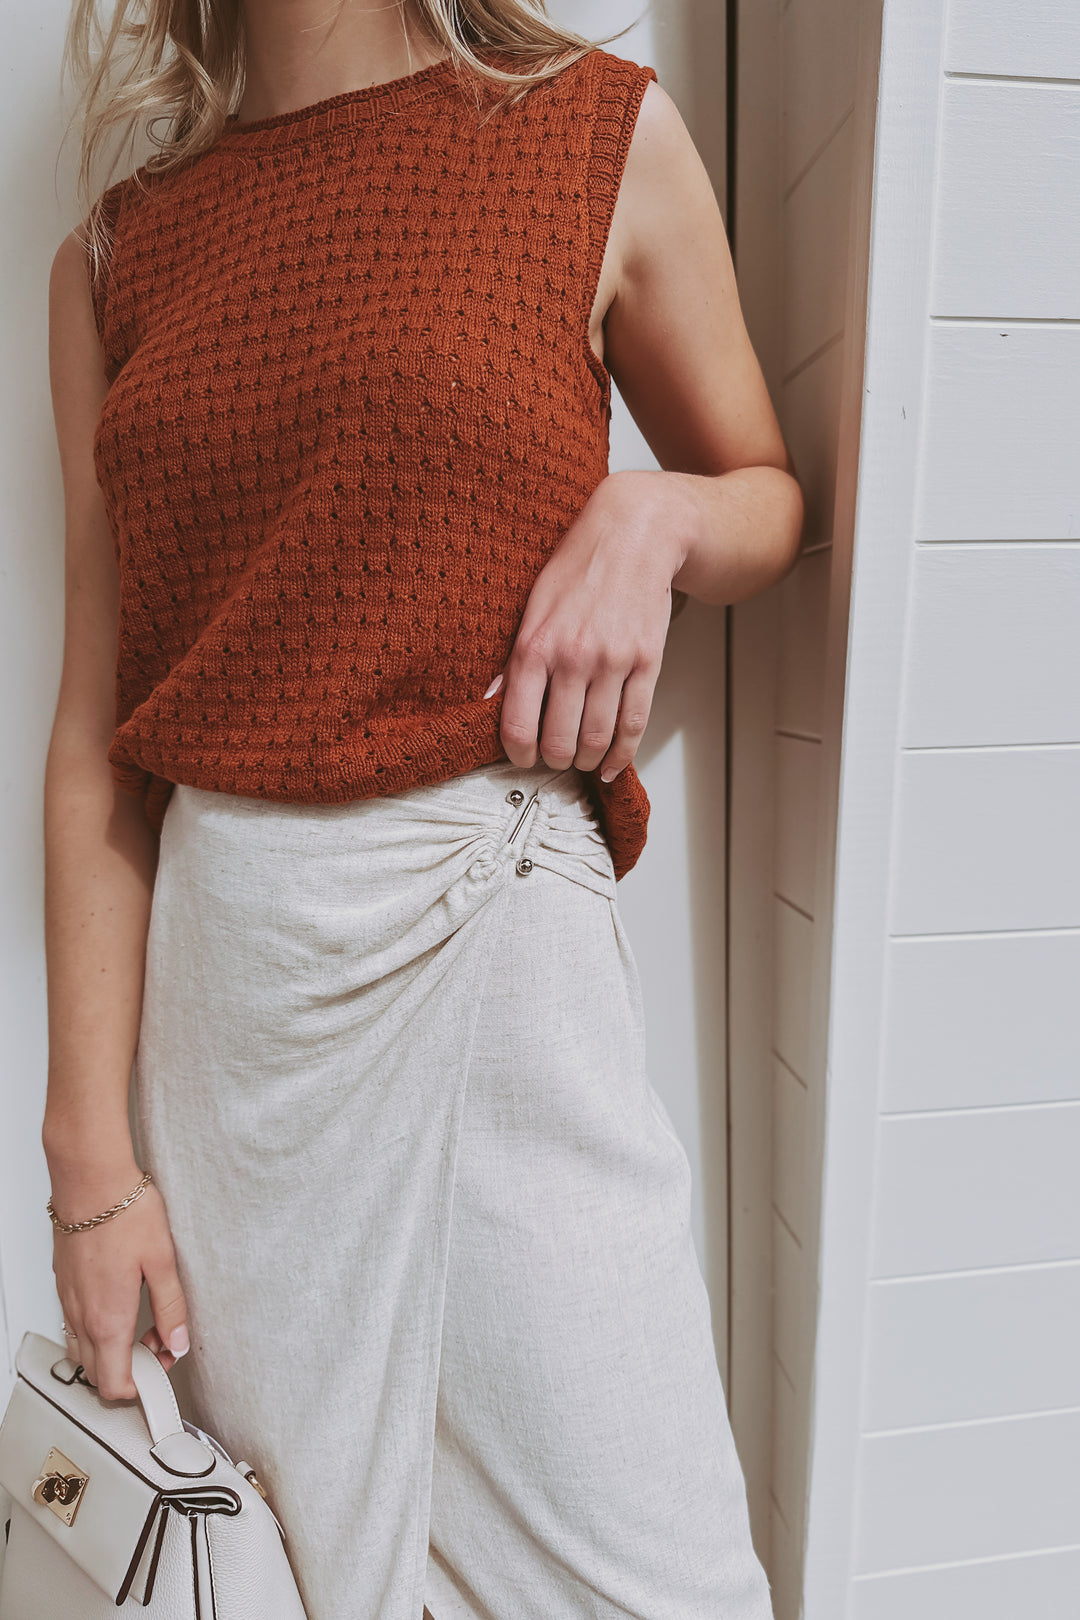 The Al Fresco Brick Sleeveless Sweater